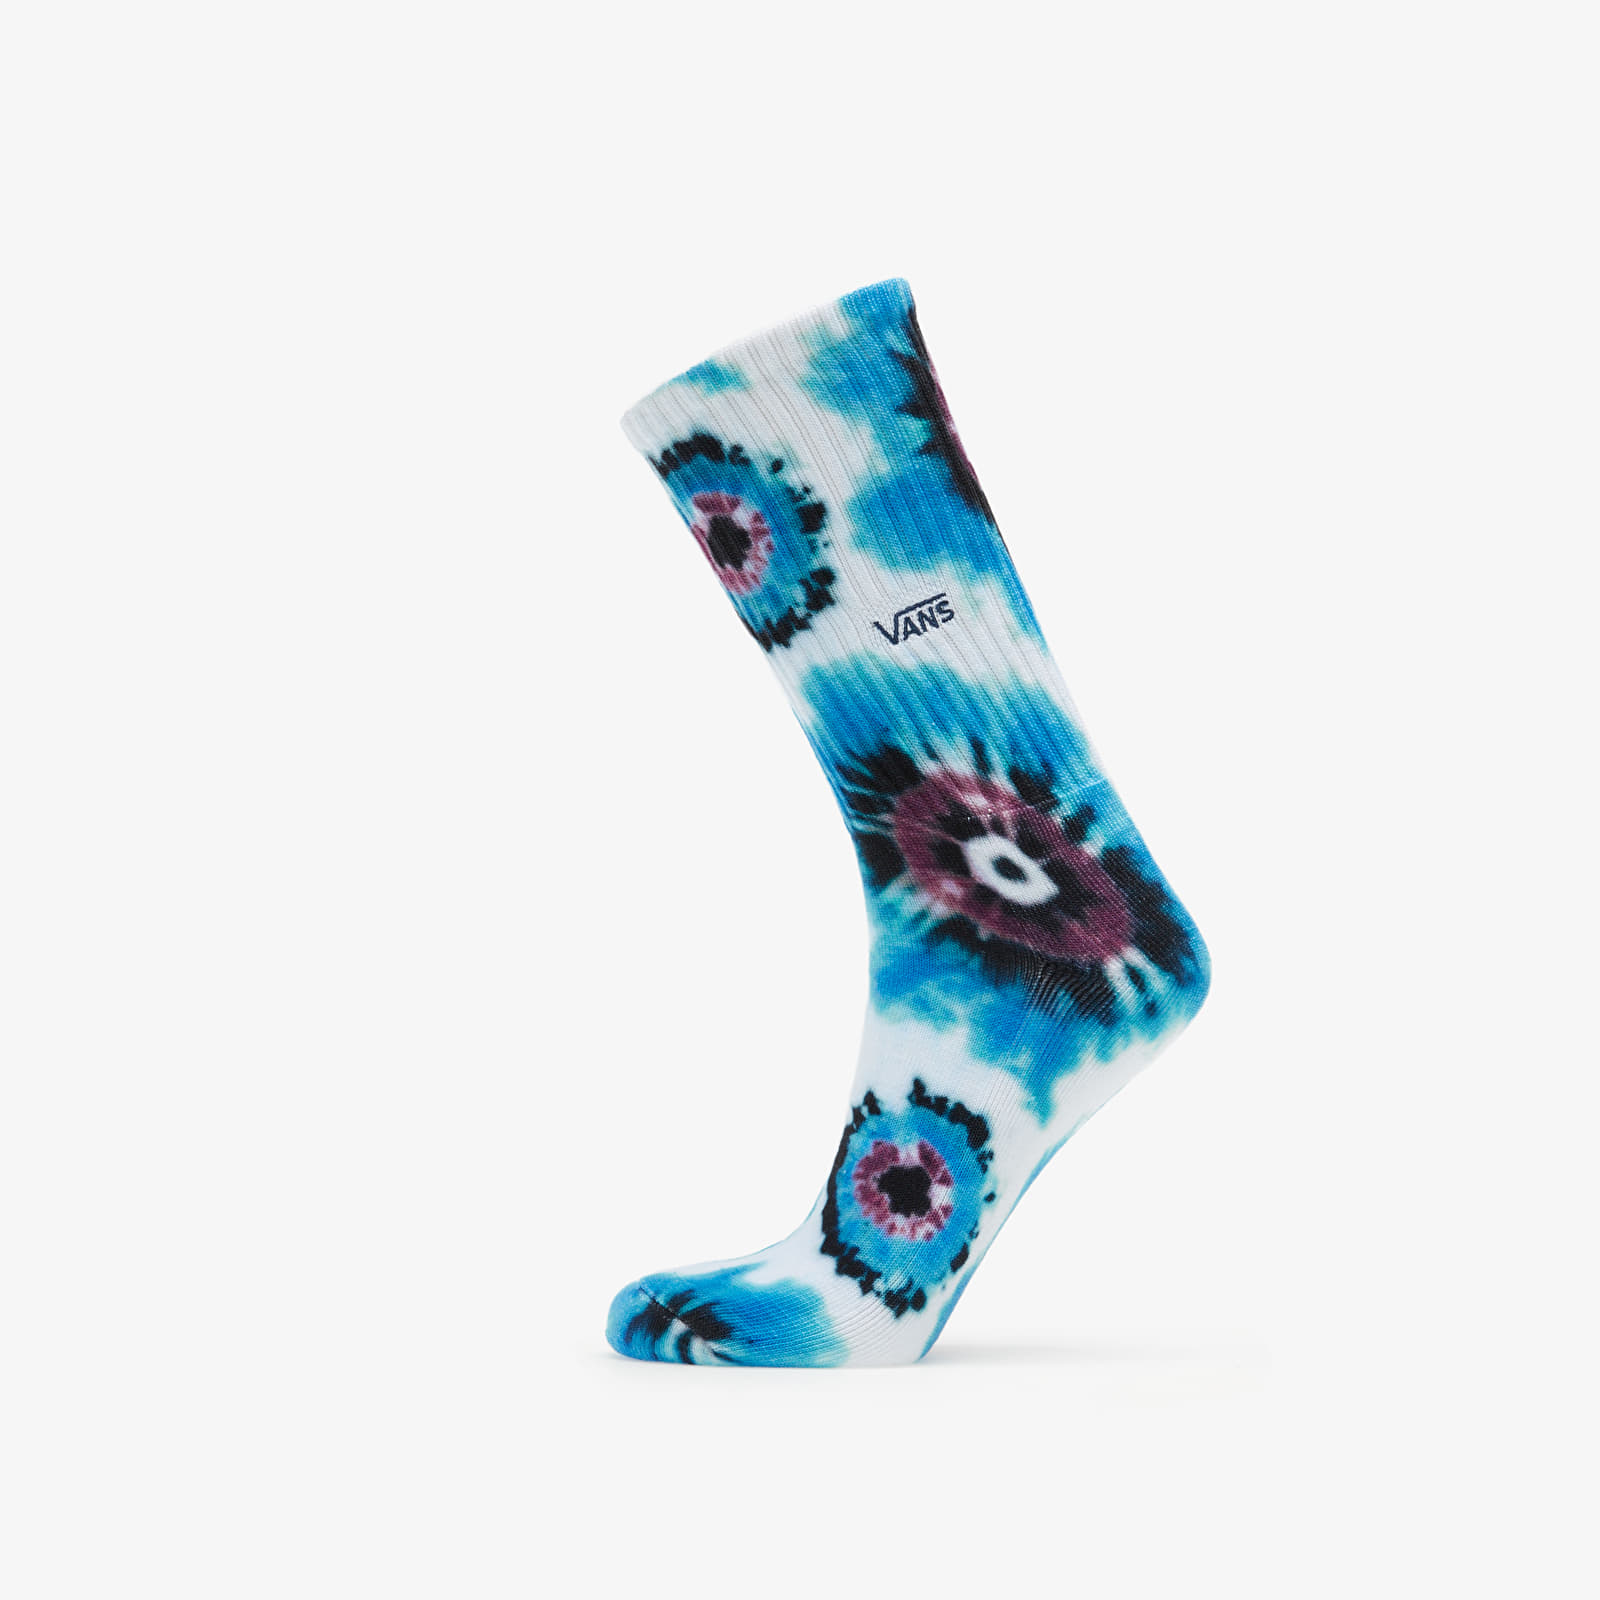 Calzetti Vans Socks Multicolor